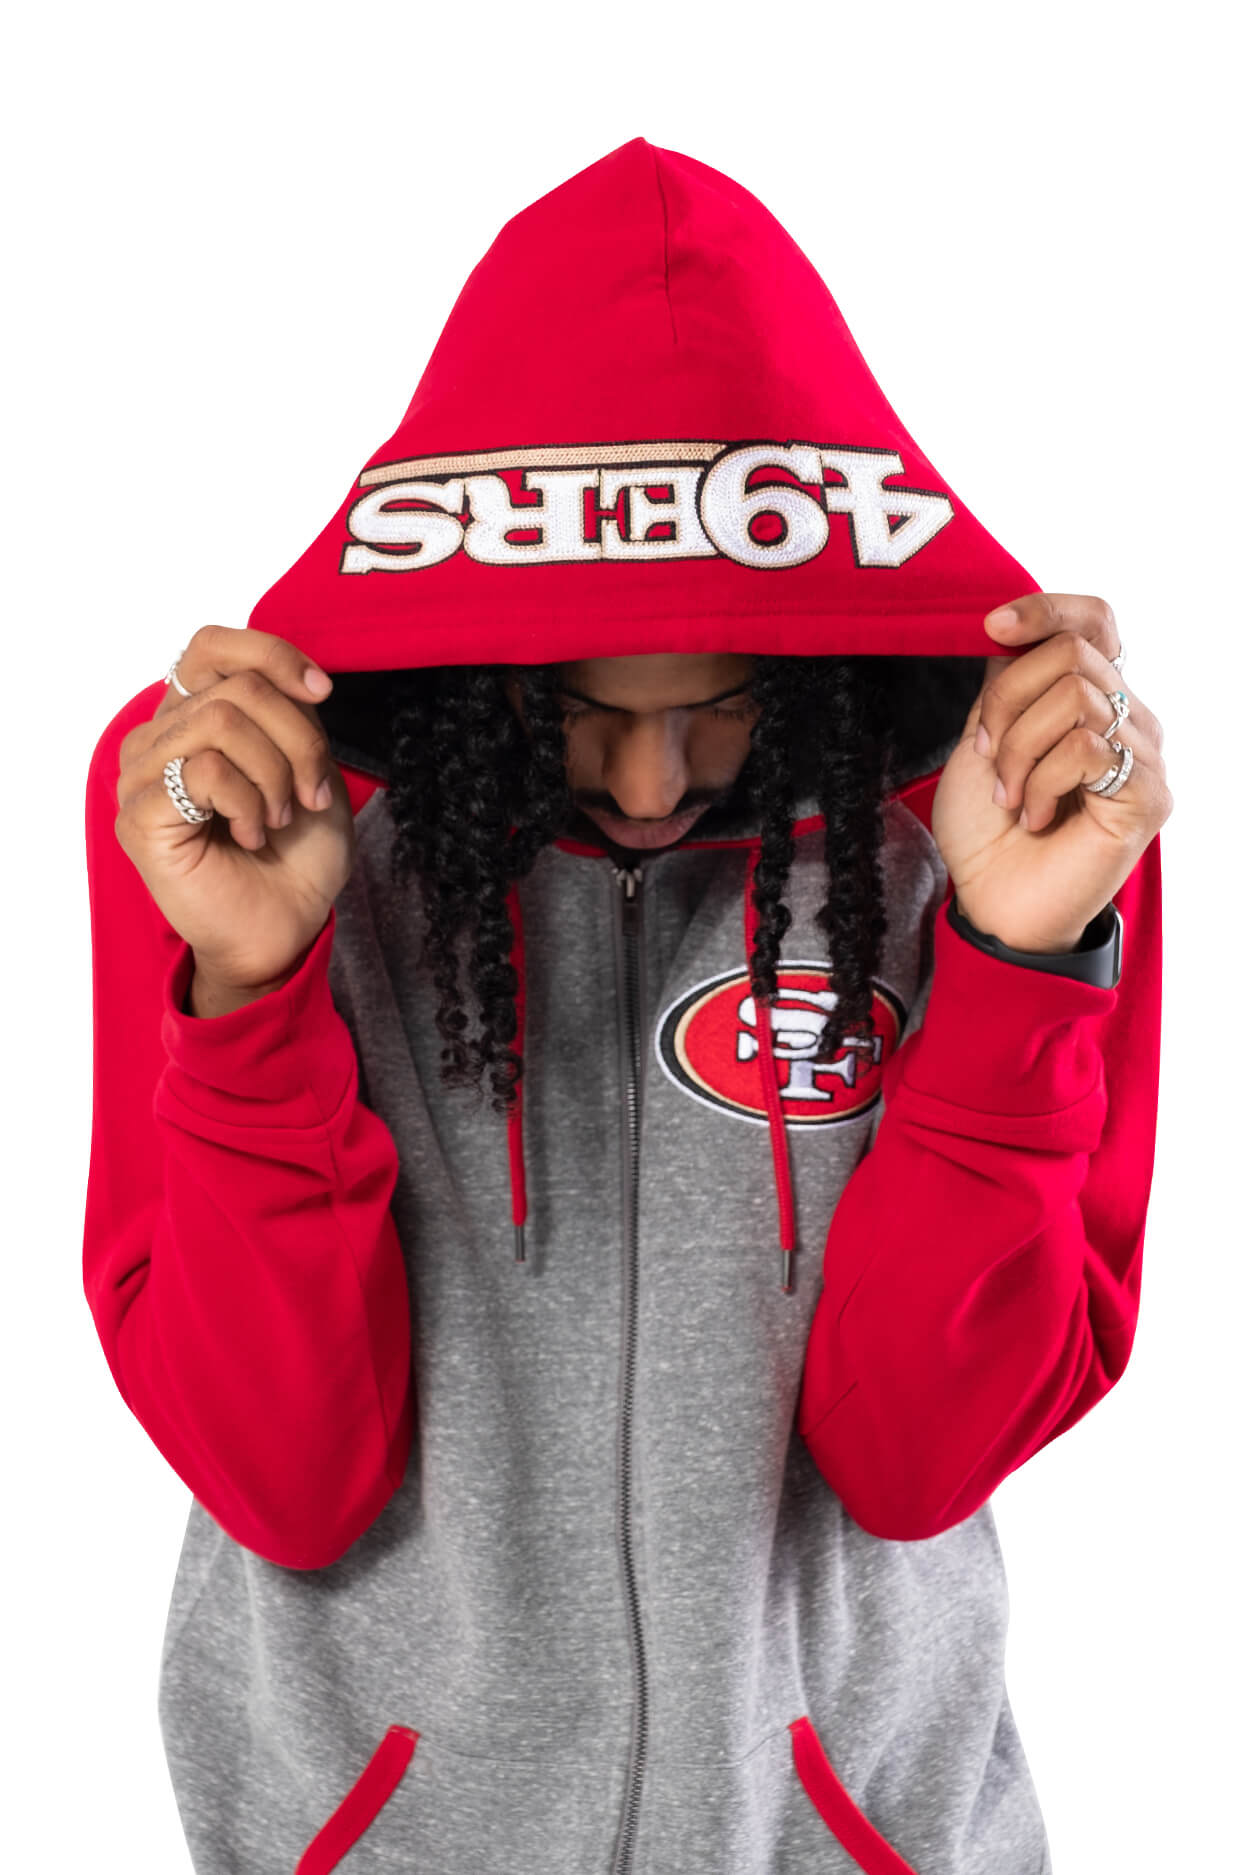 NFL San Francisco 49ers Men's Full Zip Hoodie|San Francisco 49ers